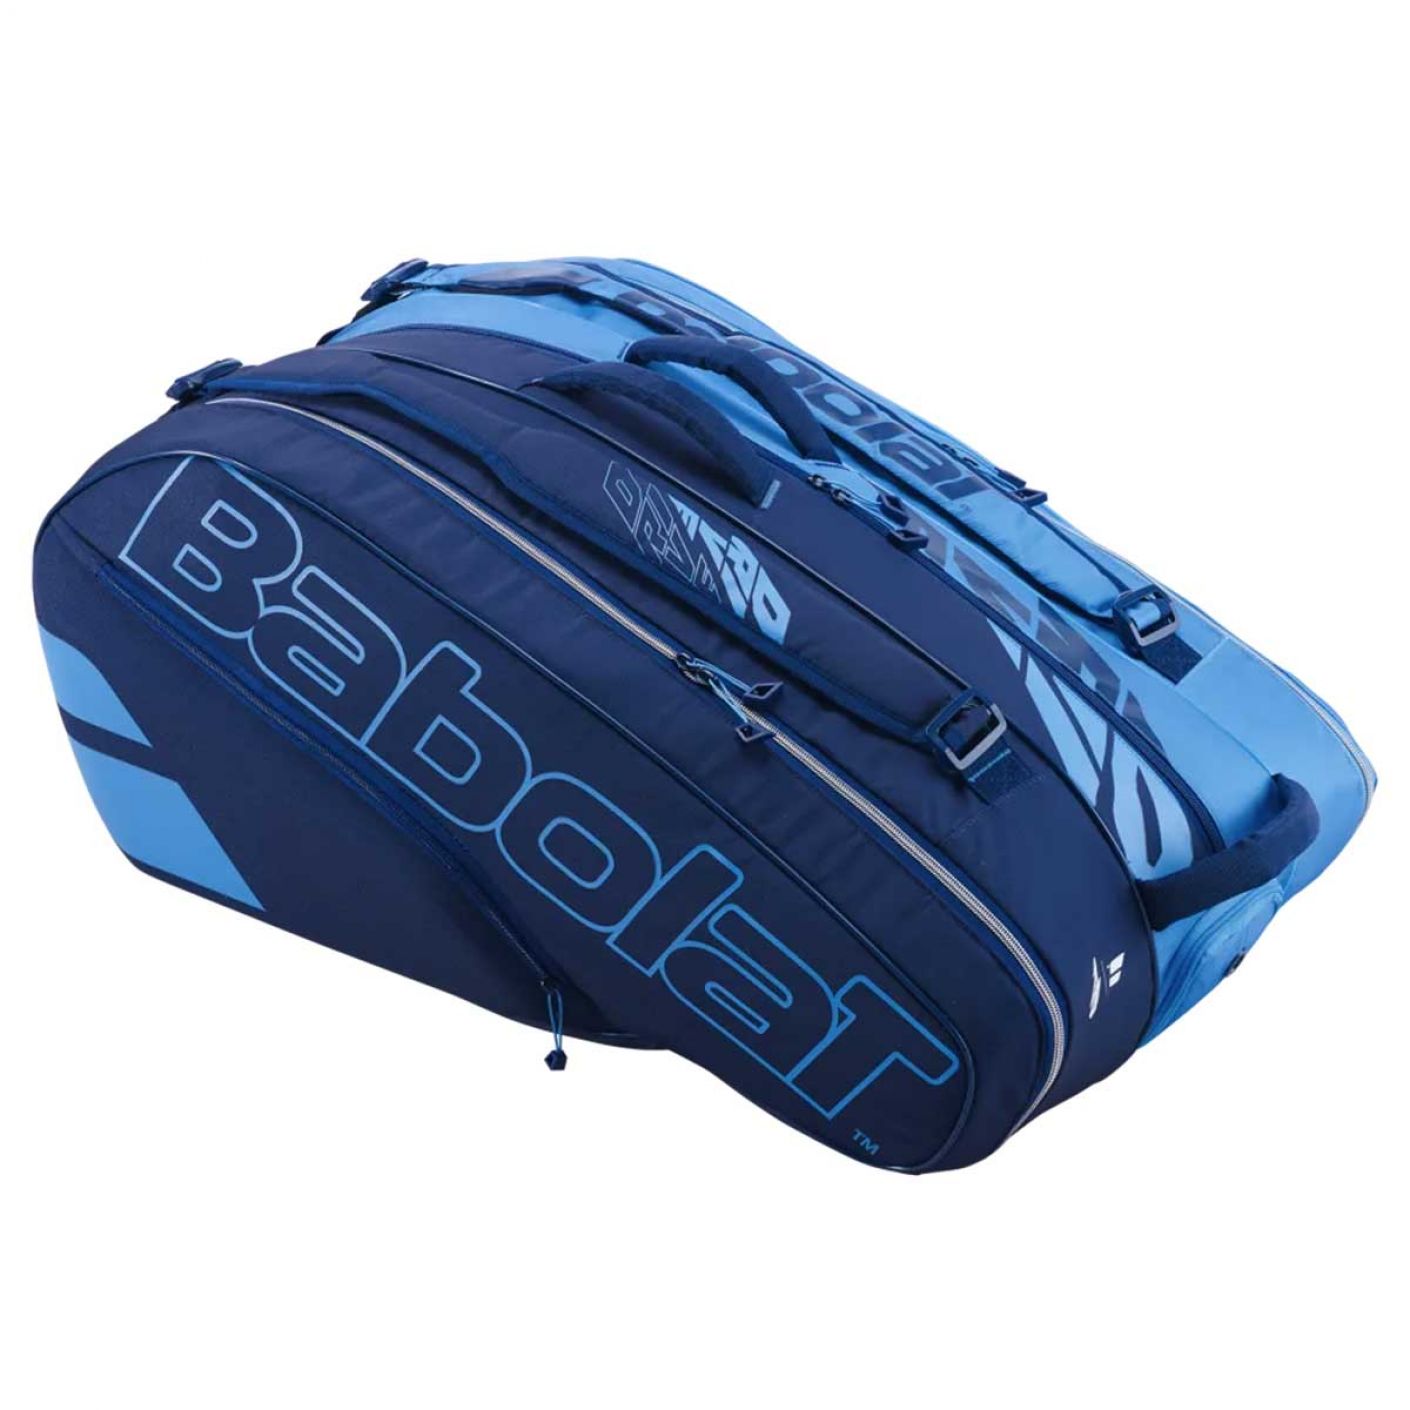 Babolat Borsone Tennis Rh X 12 Pure Drive